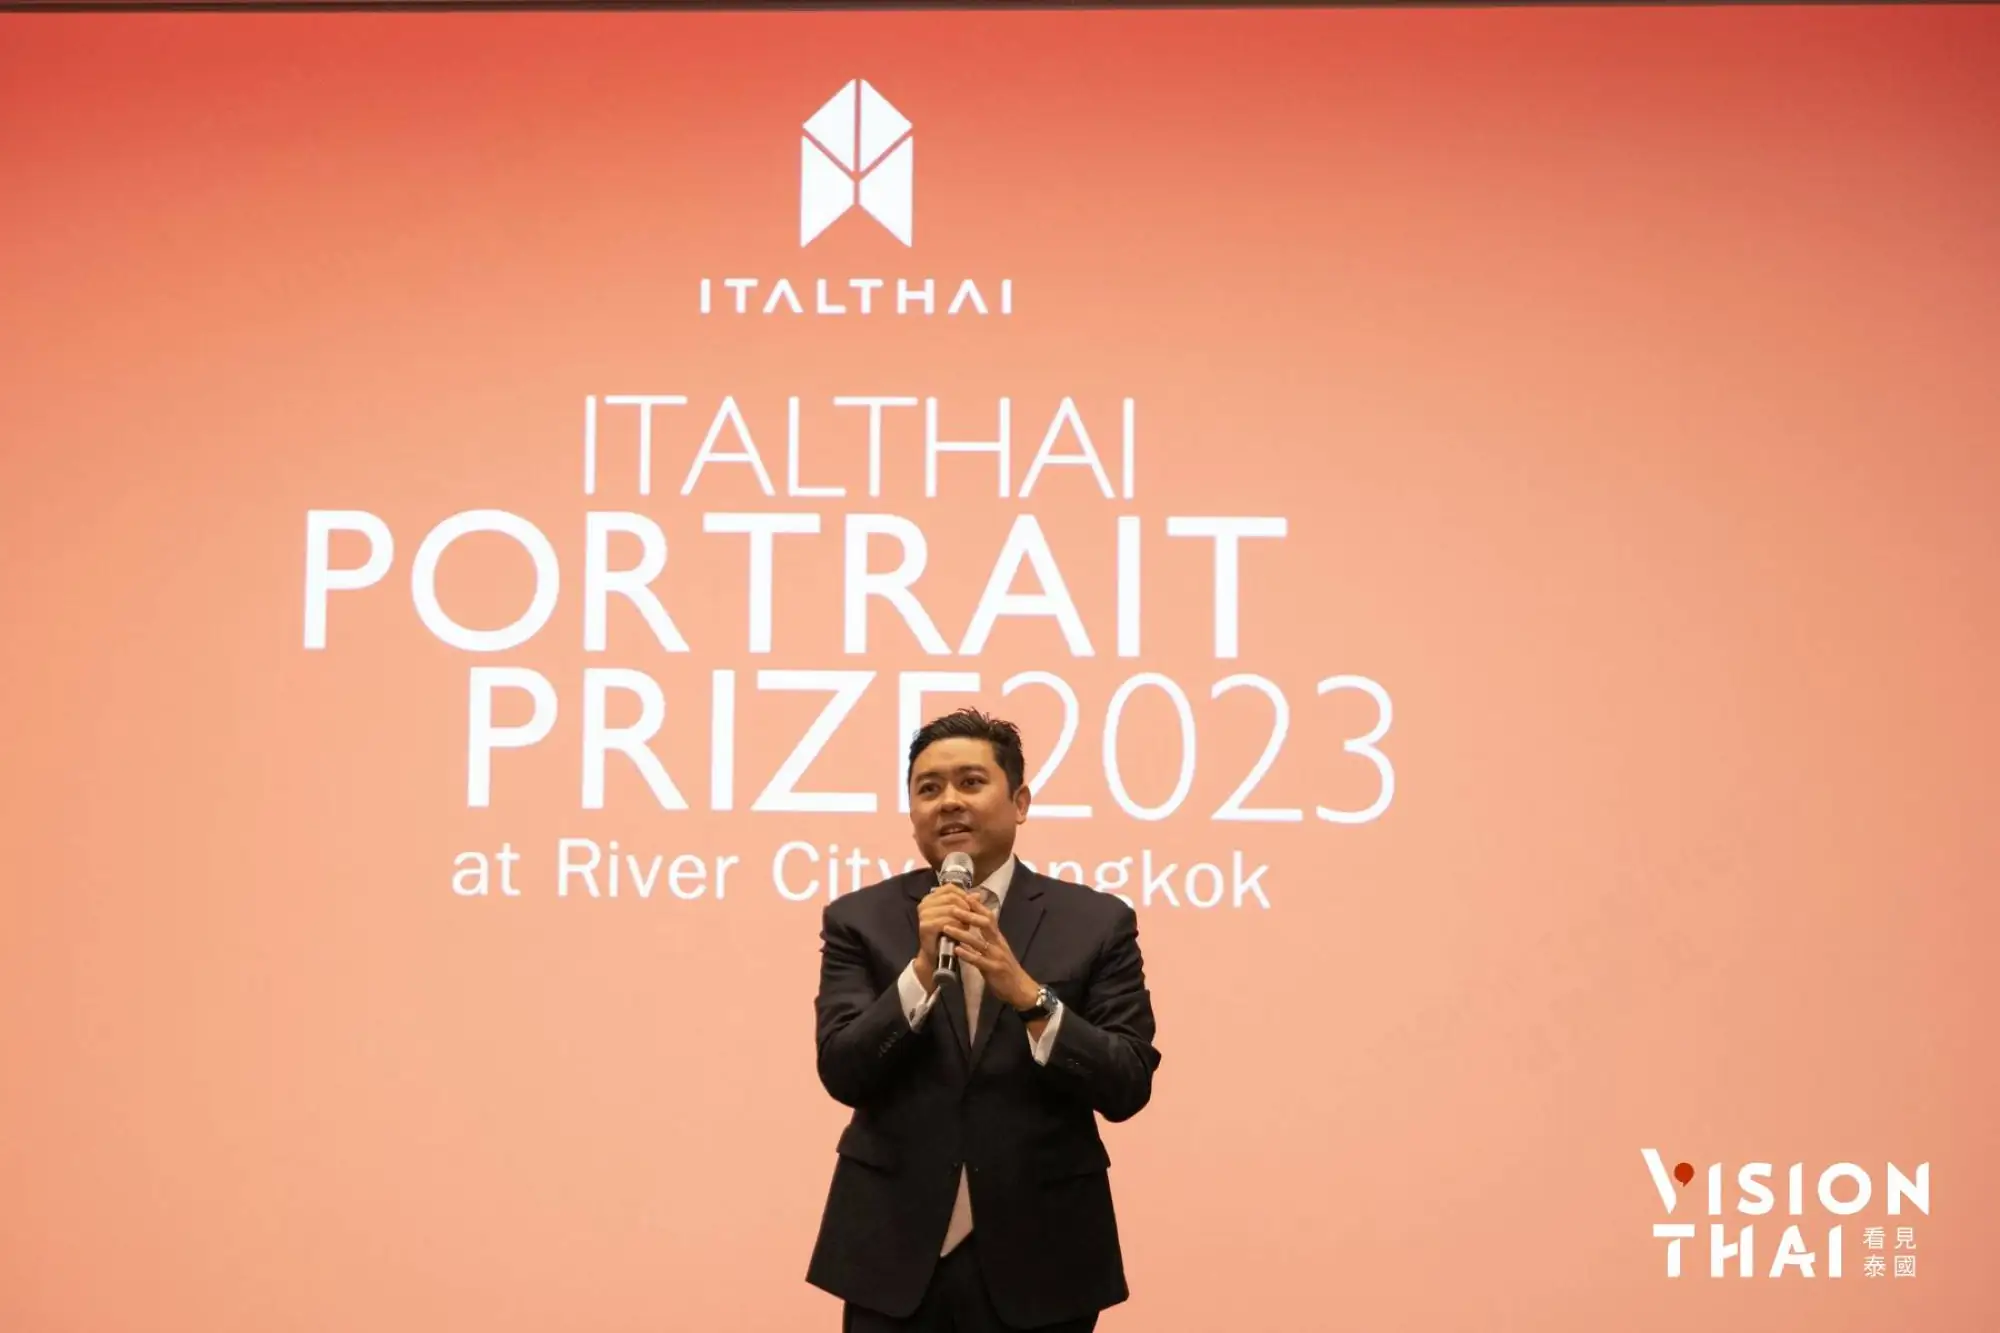 Italthai執行長Yuthachai Charanachitta欲透過贊助肖像畫大獎賽，加速泰國藝術市場發展。（圖片來源：Vision Thai 看見泰國）